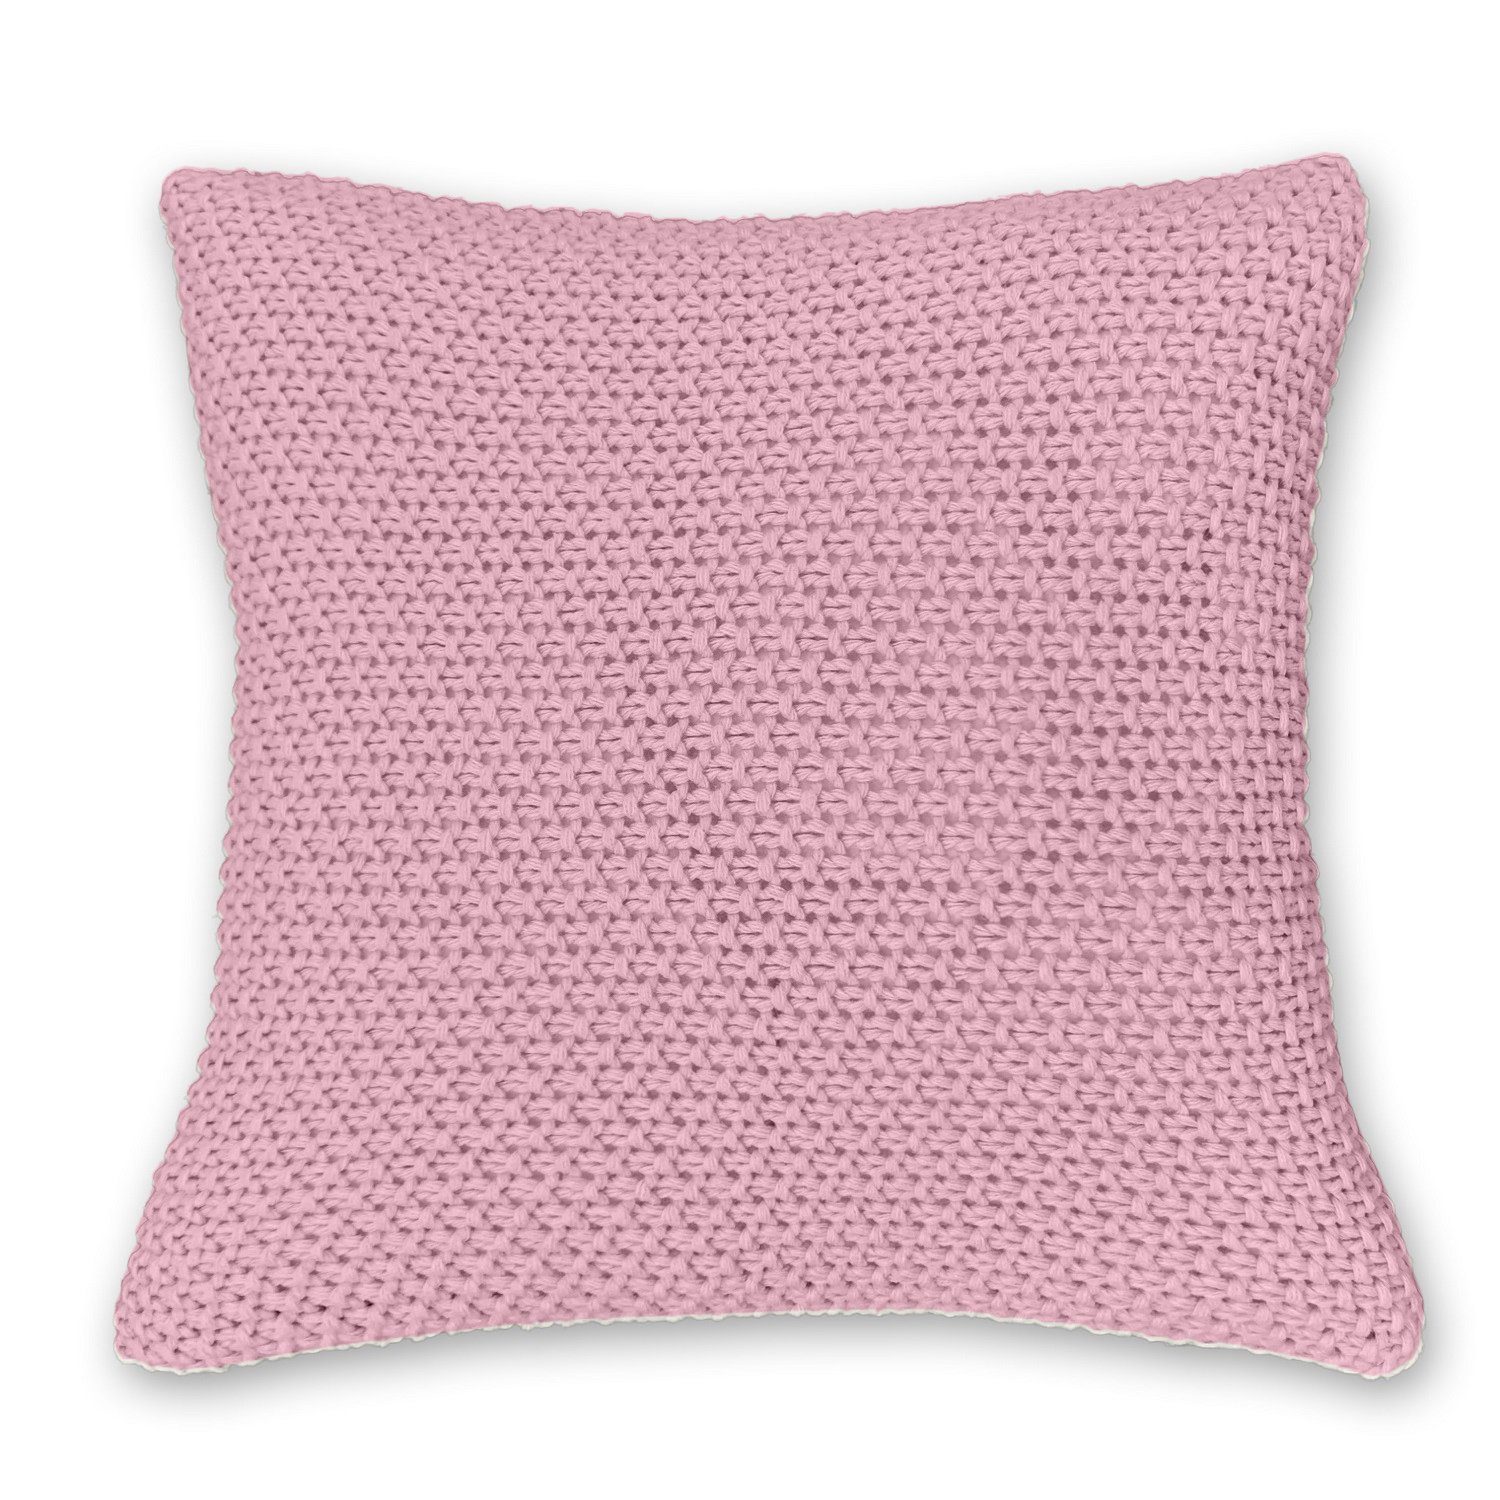 Kissenhülle Strick mit Reißverschluss, 45x45 cm, wometo (1 Stück) rosa